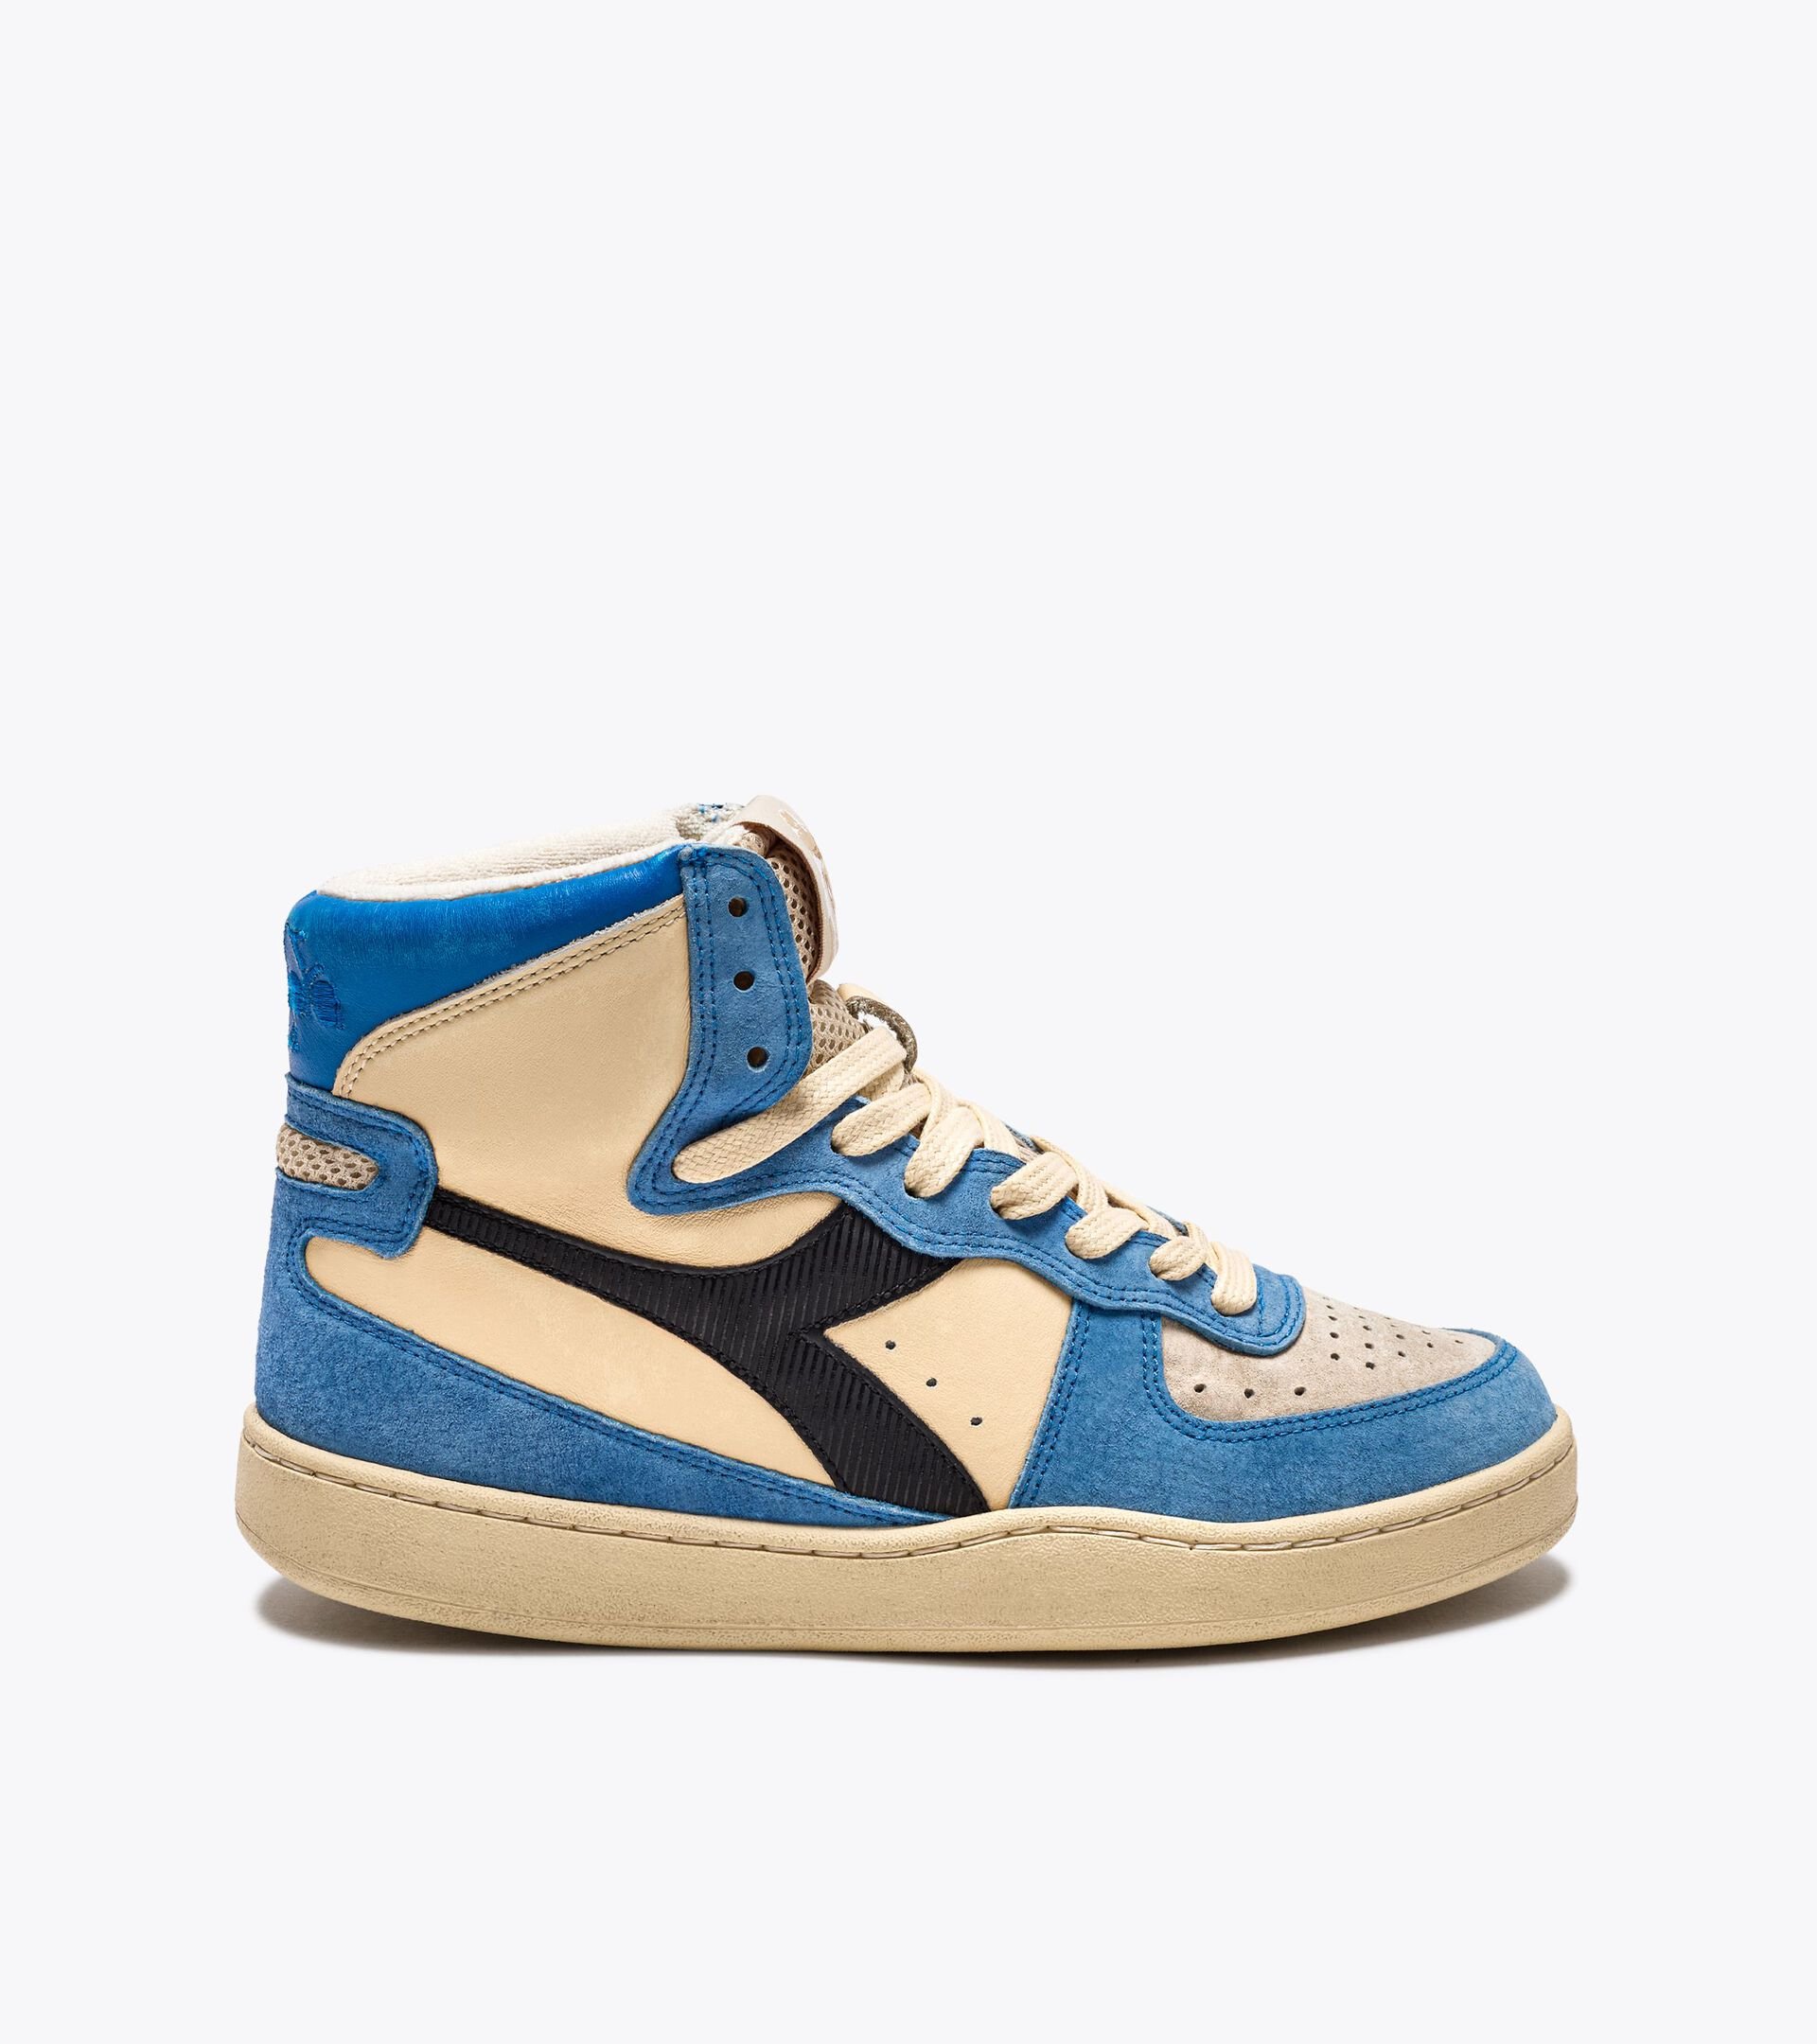 Heritage sneakers - Made in Italy - Gender Neutral MI BASKET PODIO ITA X DINO MENEGHIN SKY-BLUE MALIBU - Diadora